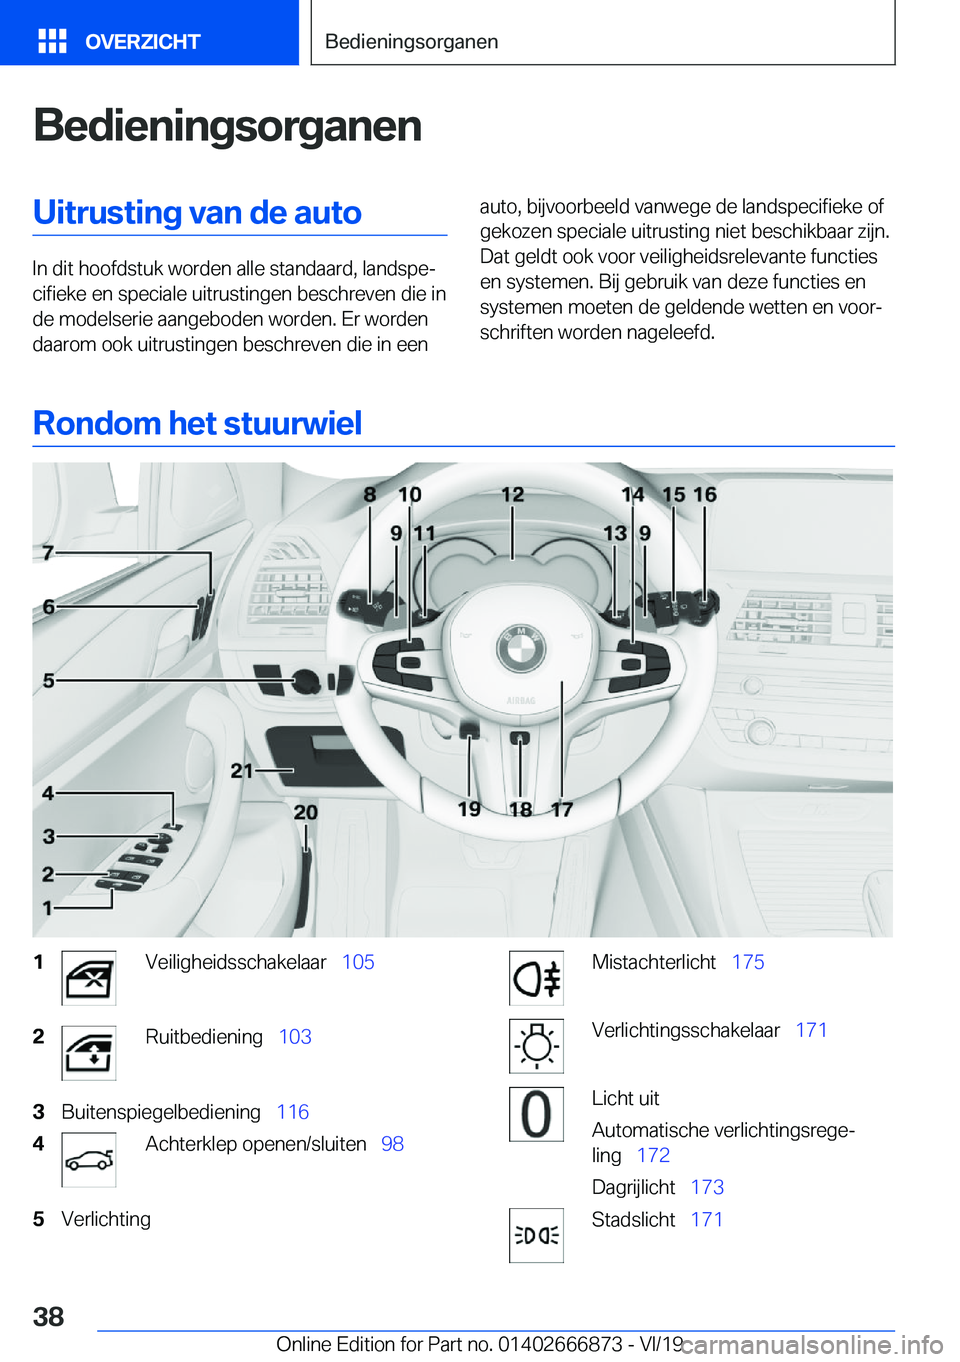 BMW X4 M 2020  Instructieboekjes (in Dutch) �B�e�d�i�e�n�i�n�g�s�o�r�g�a�n�e�n�U�i�t�r�u�s�t�i�n�g��v�a�n��d�e��a�u�t�o
�I�n��d�i�t��h�o�o�f�d�s�t�u�k��w�o�r�d�e�n��a�l�l�e��s�t�a�n�d�a�a�r�d�,��l�a�n�d�s�p�ej�c�i�f�i�e�k�e��e�n��s�